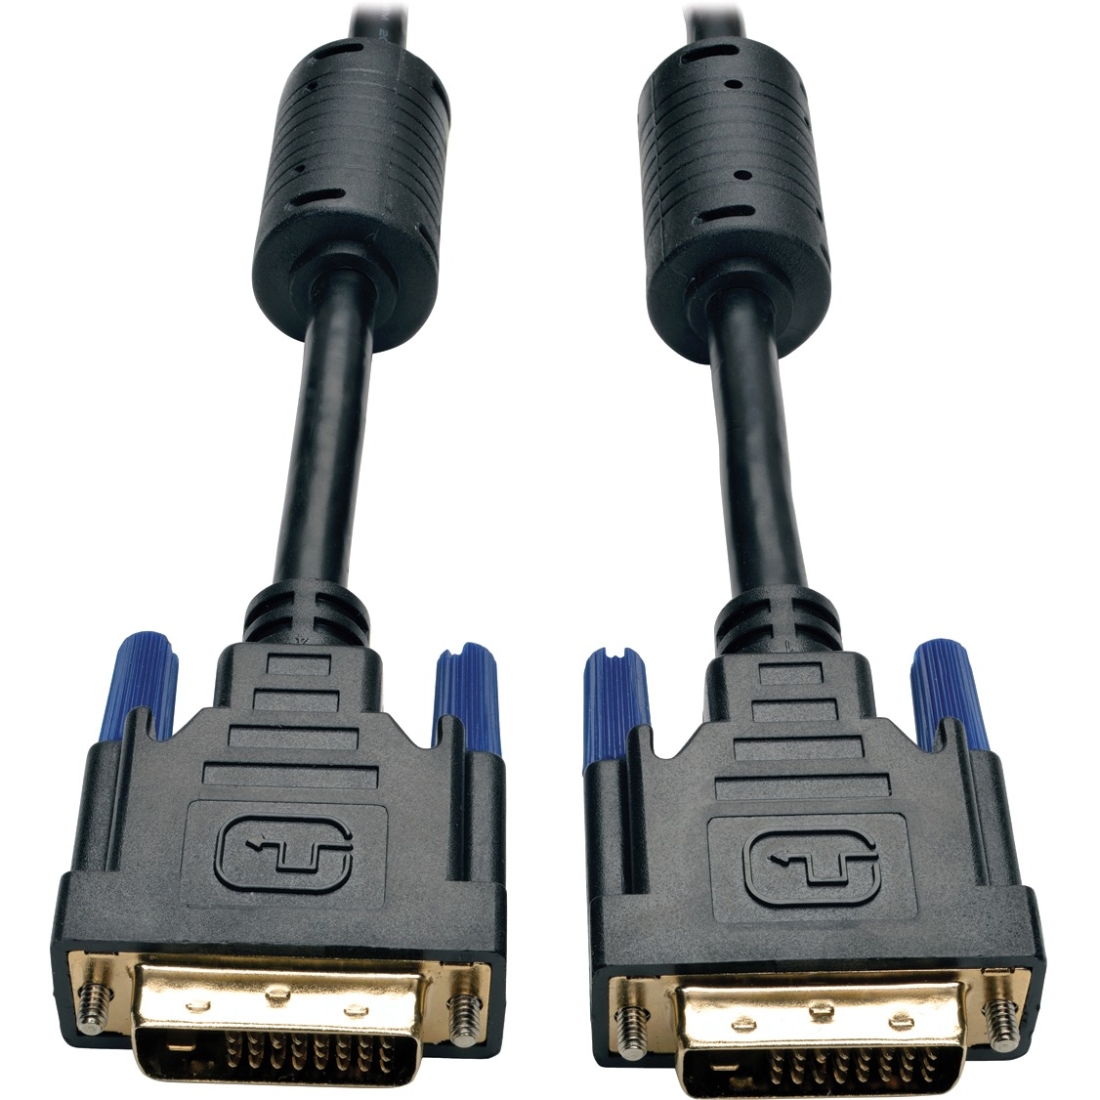 Tripp Lite P560-100-HD DVI High Definition Dual Link Digital TMDS Monitor Cable (DVI-D M/M), 100-ft. - image 2 of 2